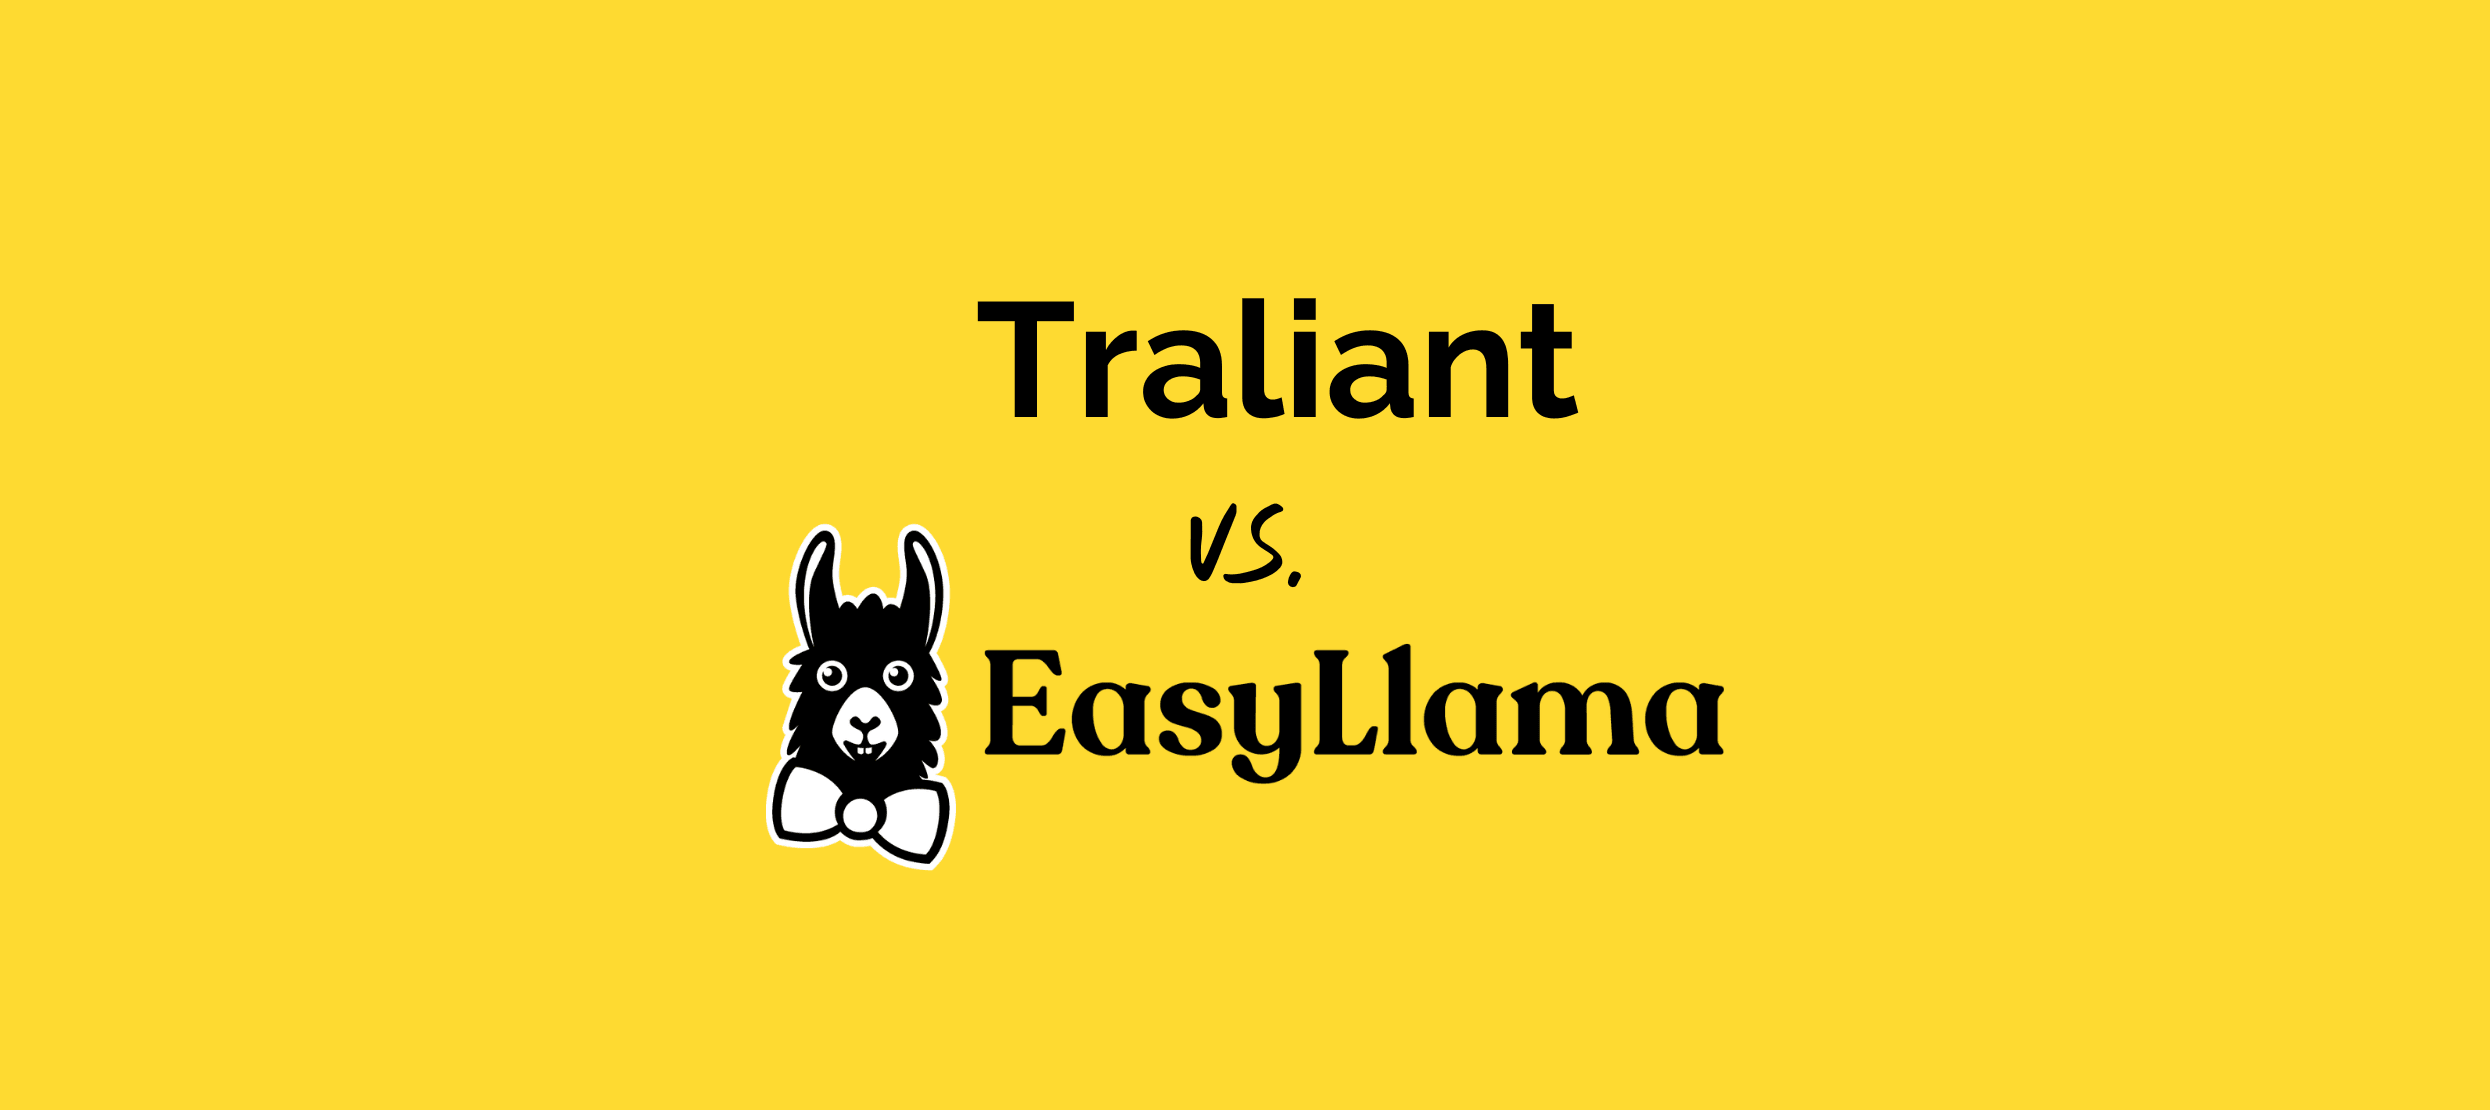 The Best Online Compliance Training Platform: Traliant Vs. EasyLlama